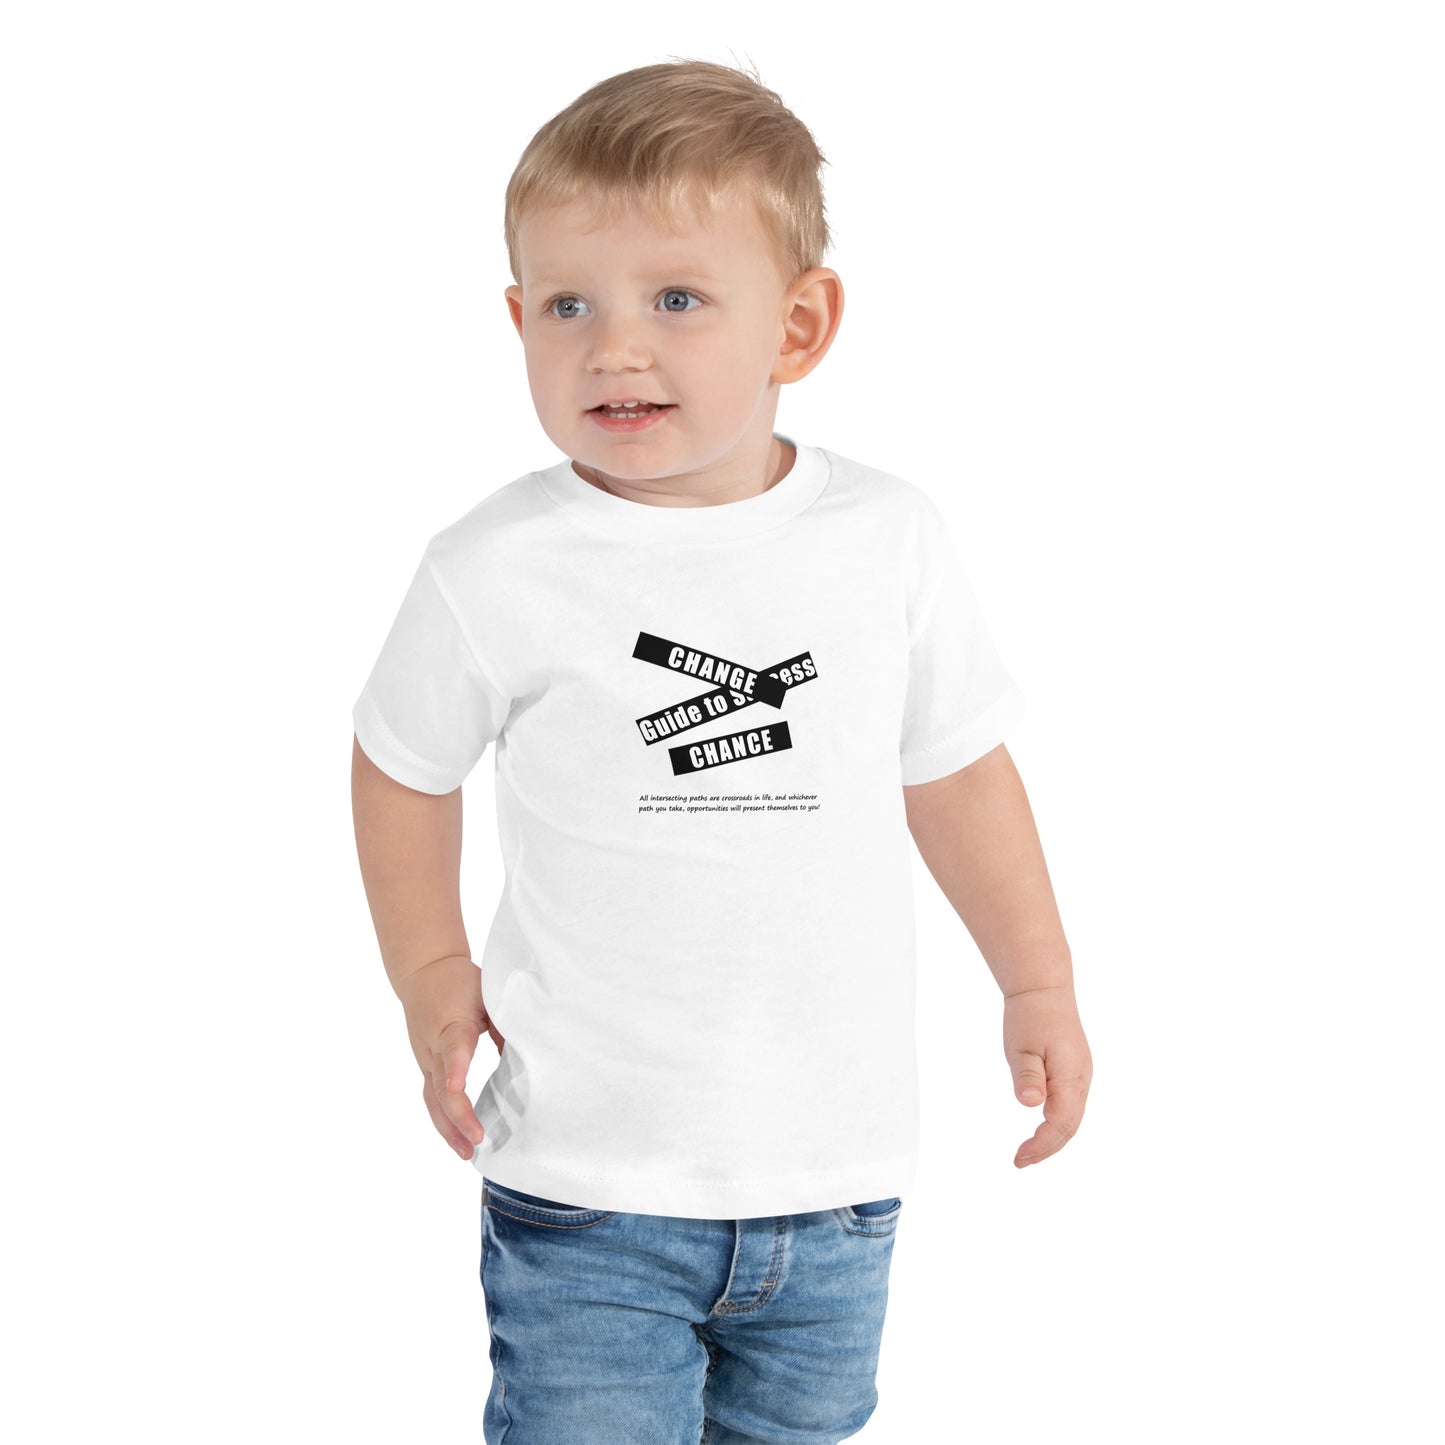 XCROSS DASH 2022 ORIGINAL DSGN "Kids Toddler Short Sleeve Tee" #0725PF